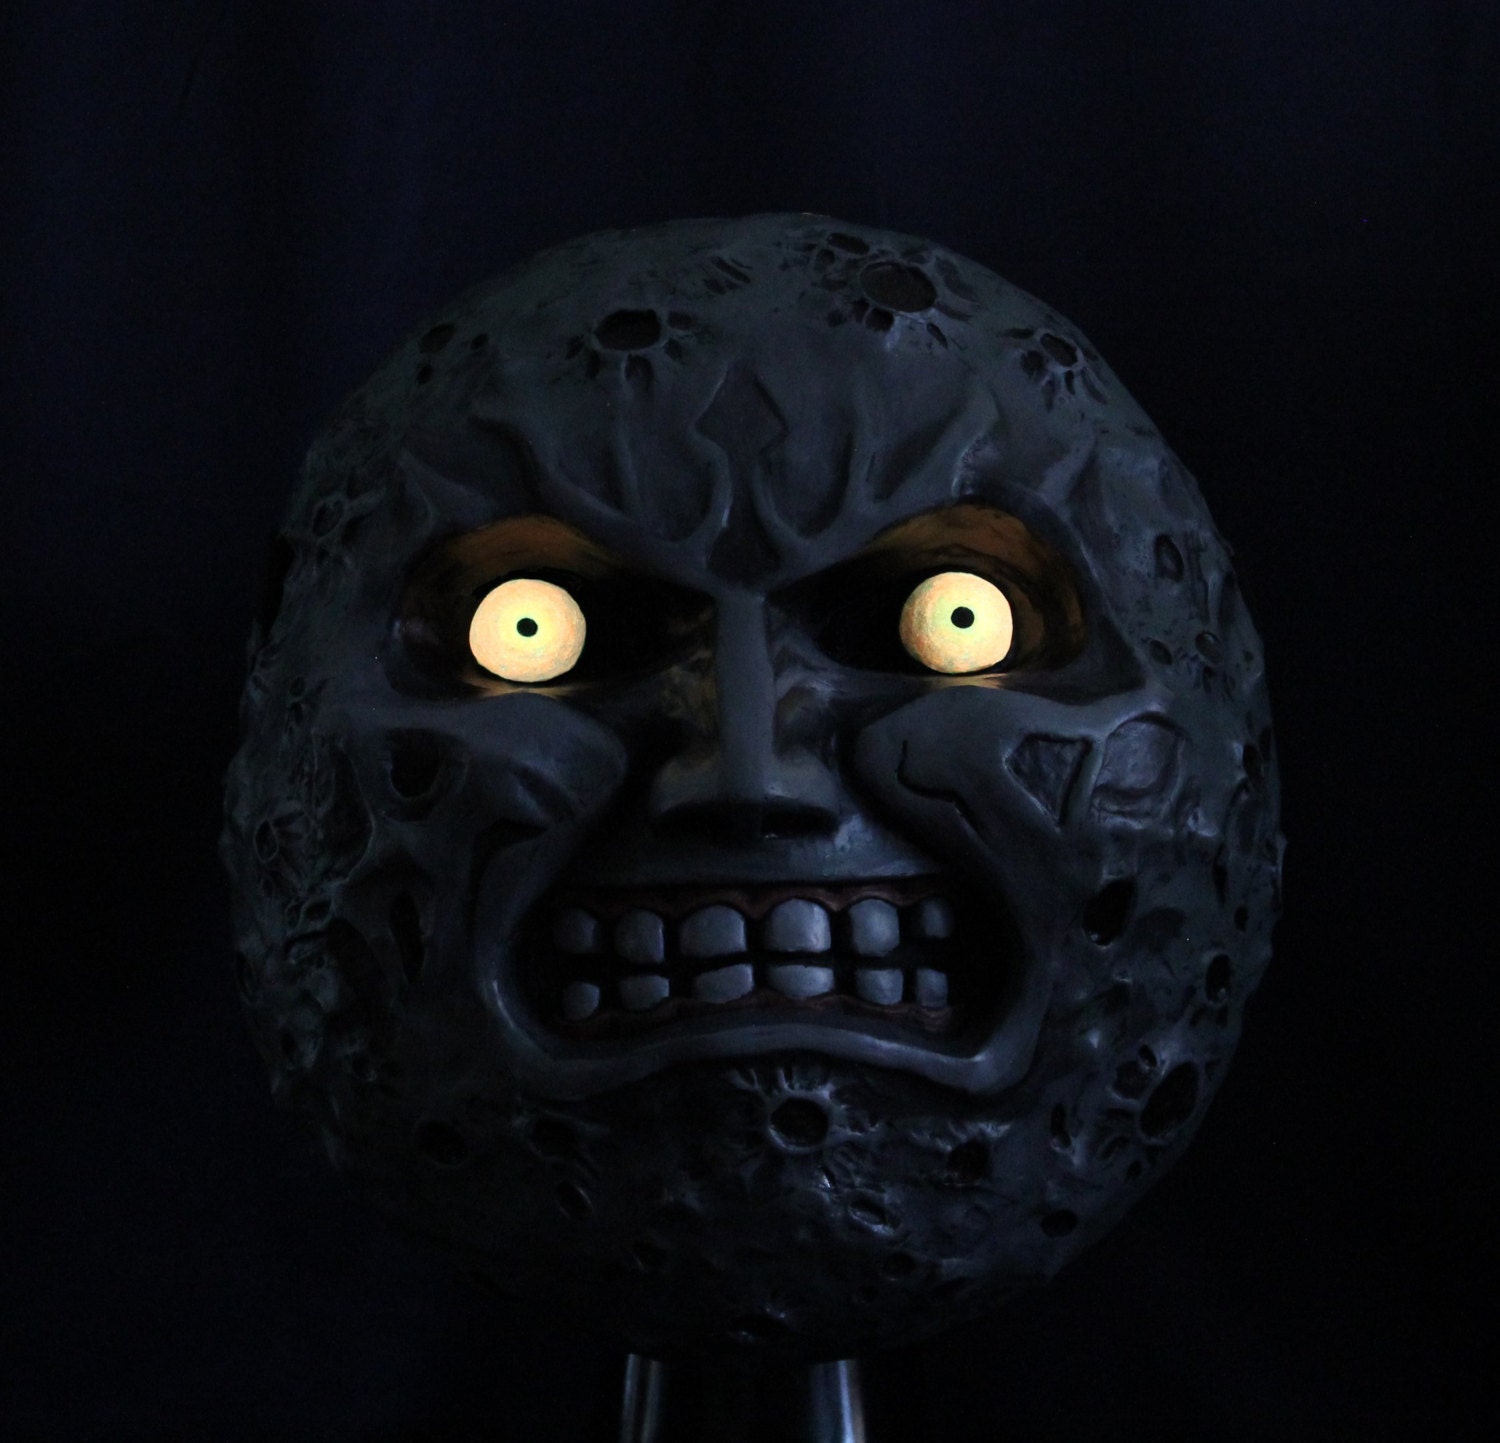 legend of zelda majoras mask moon